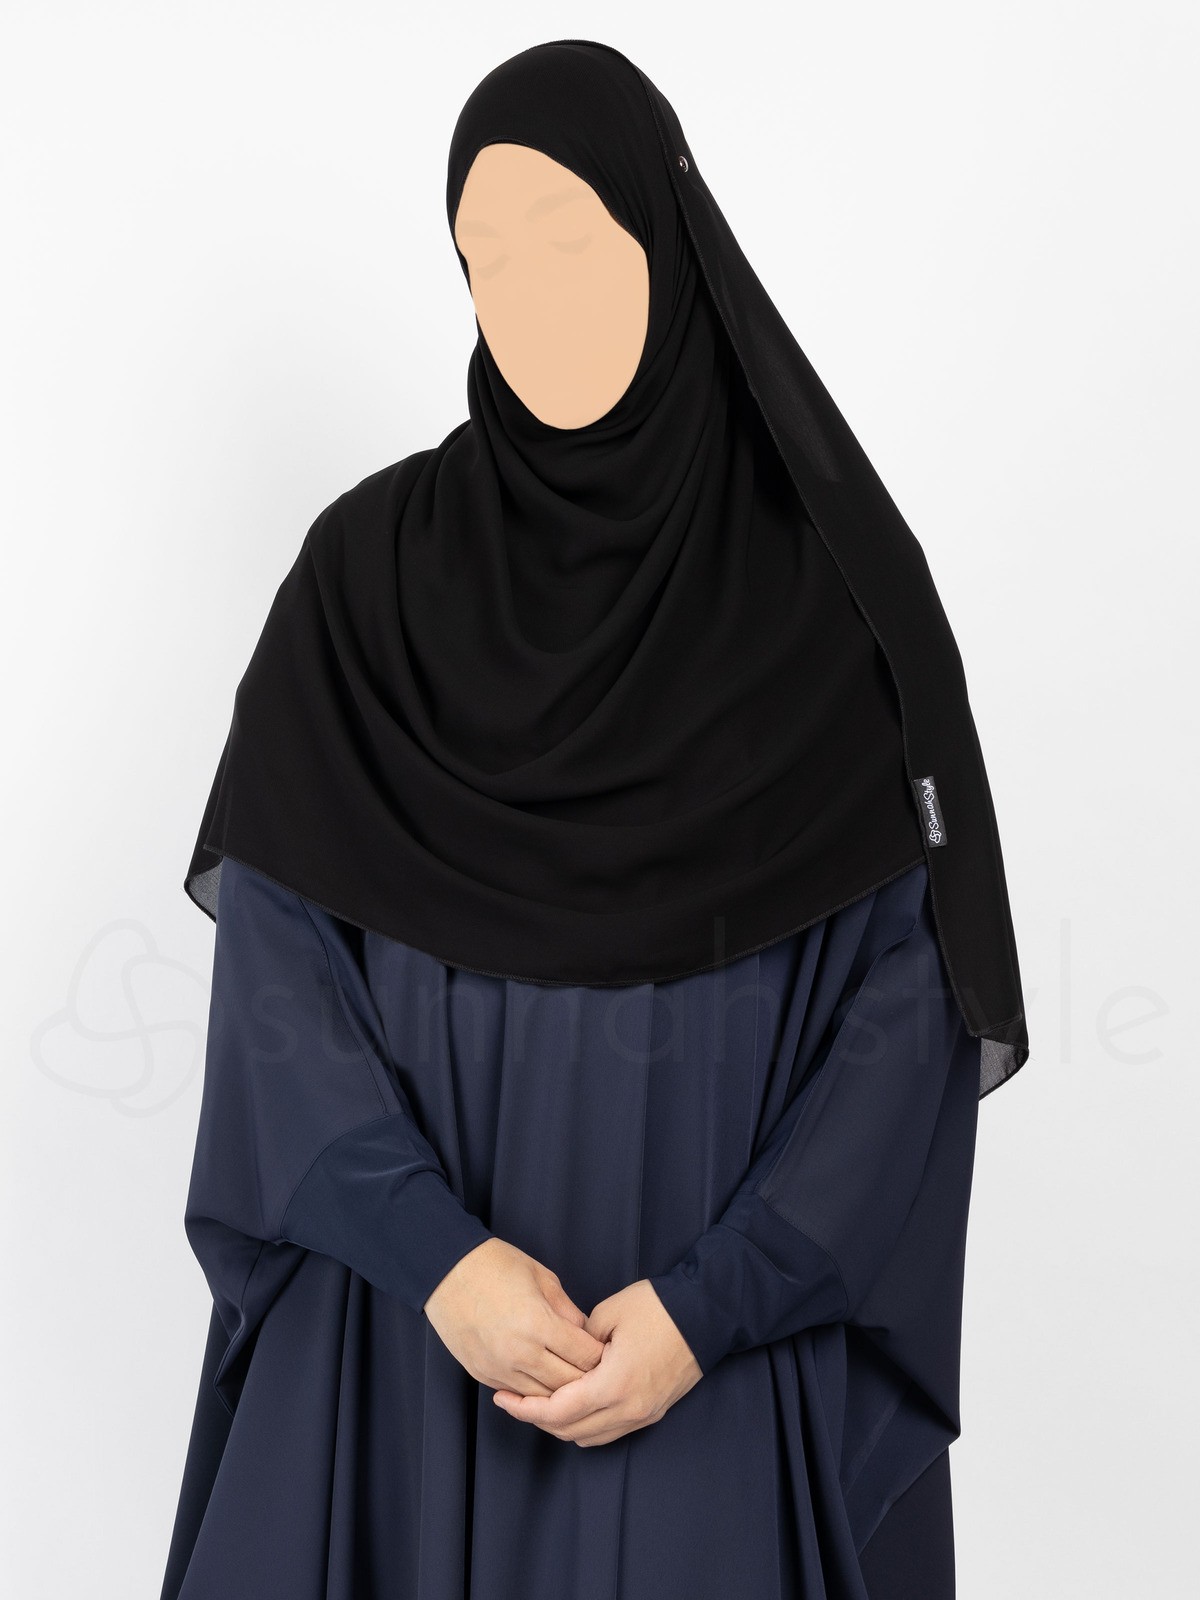 Sunnah Style - Essentials Shayla (Premium Chiffon) - Large (Black)